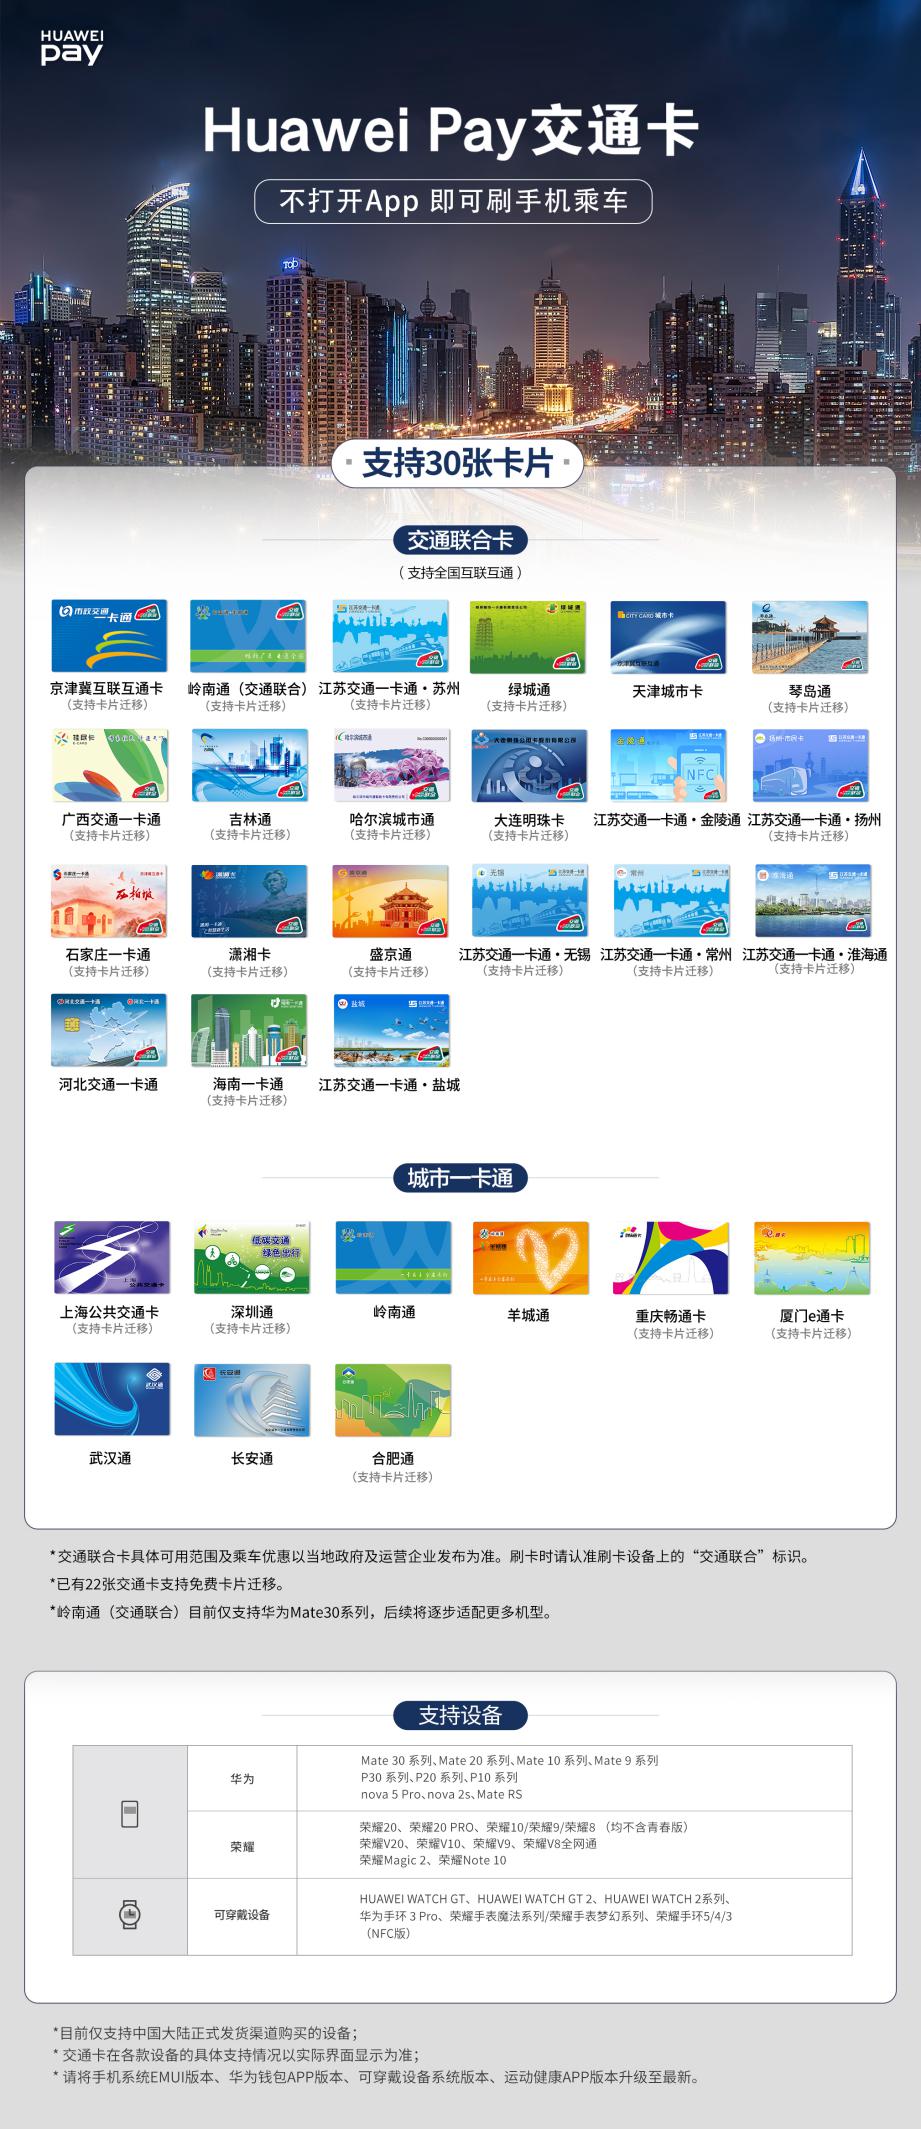 HuaweiPay支持30张交通卡，支持刷华为手机畅行271个城市